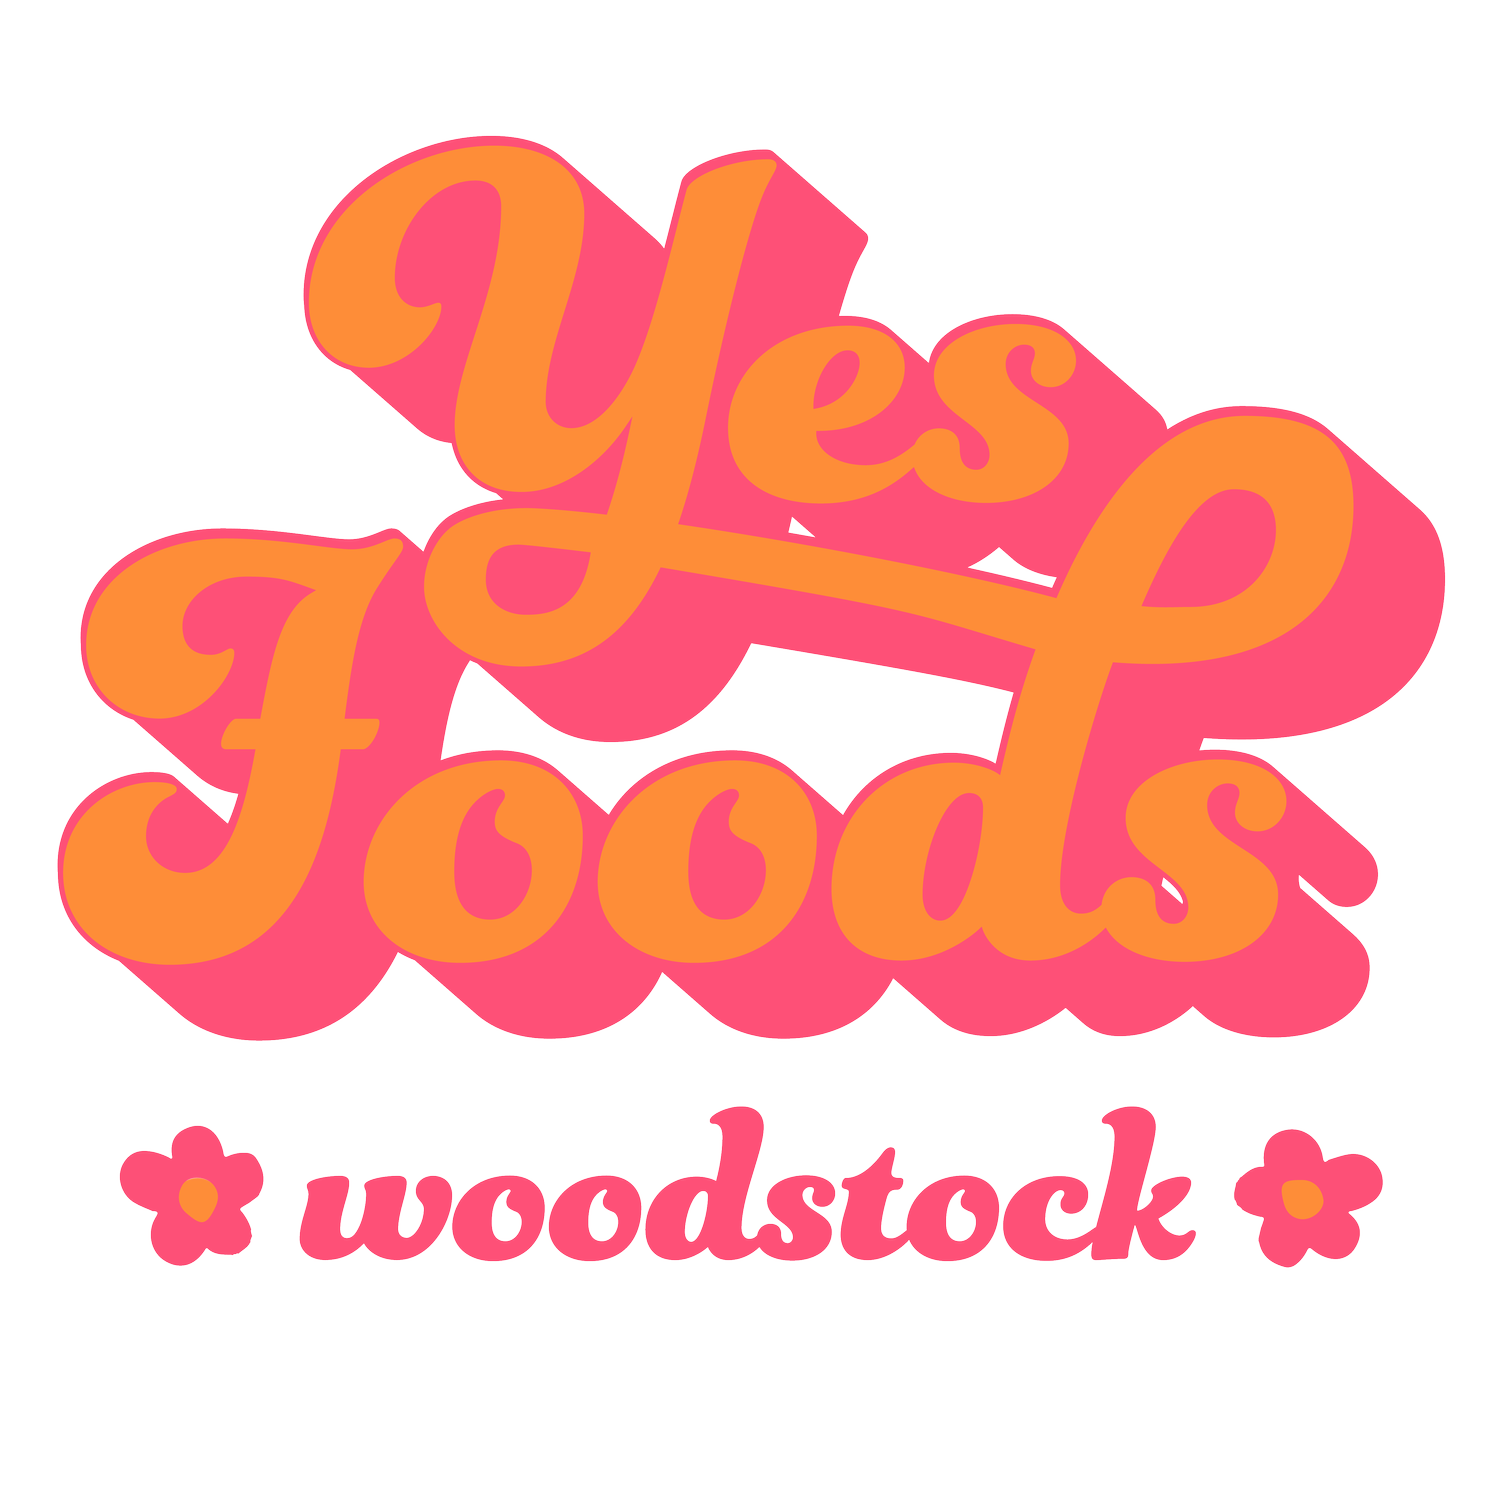 YES FOODS &mdash; WOODSTOCK